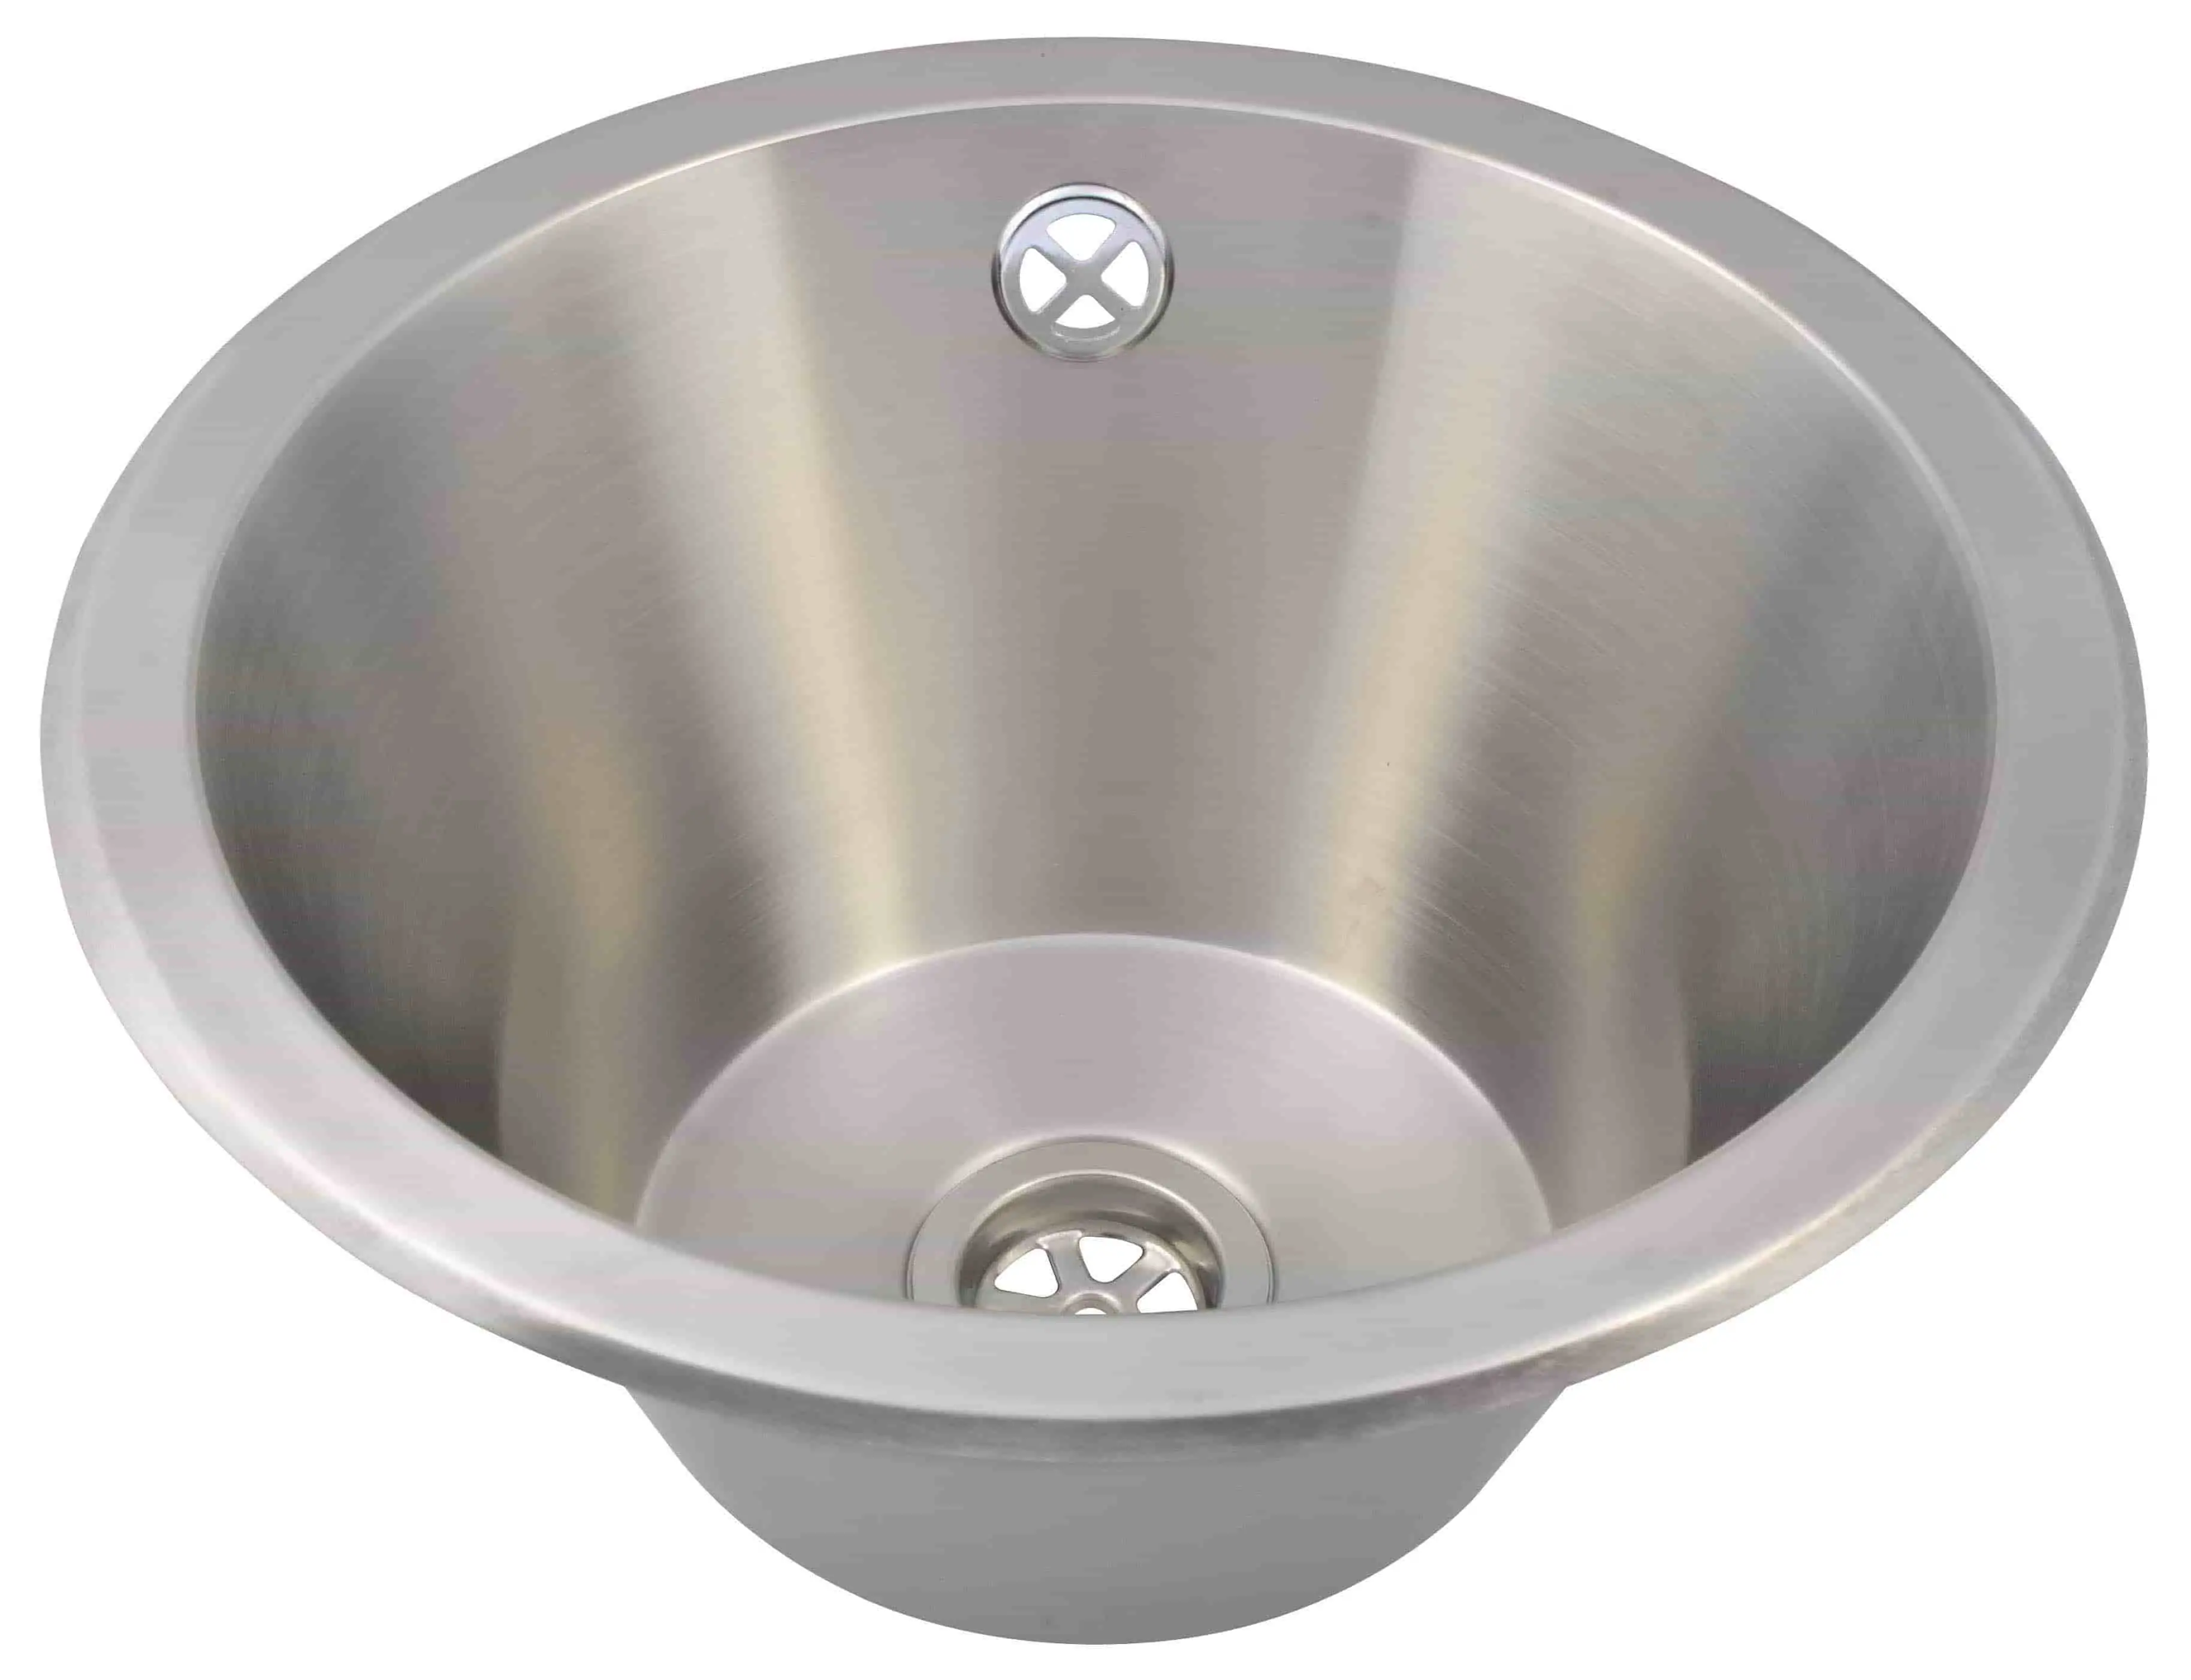 Round stainless steel sink